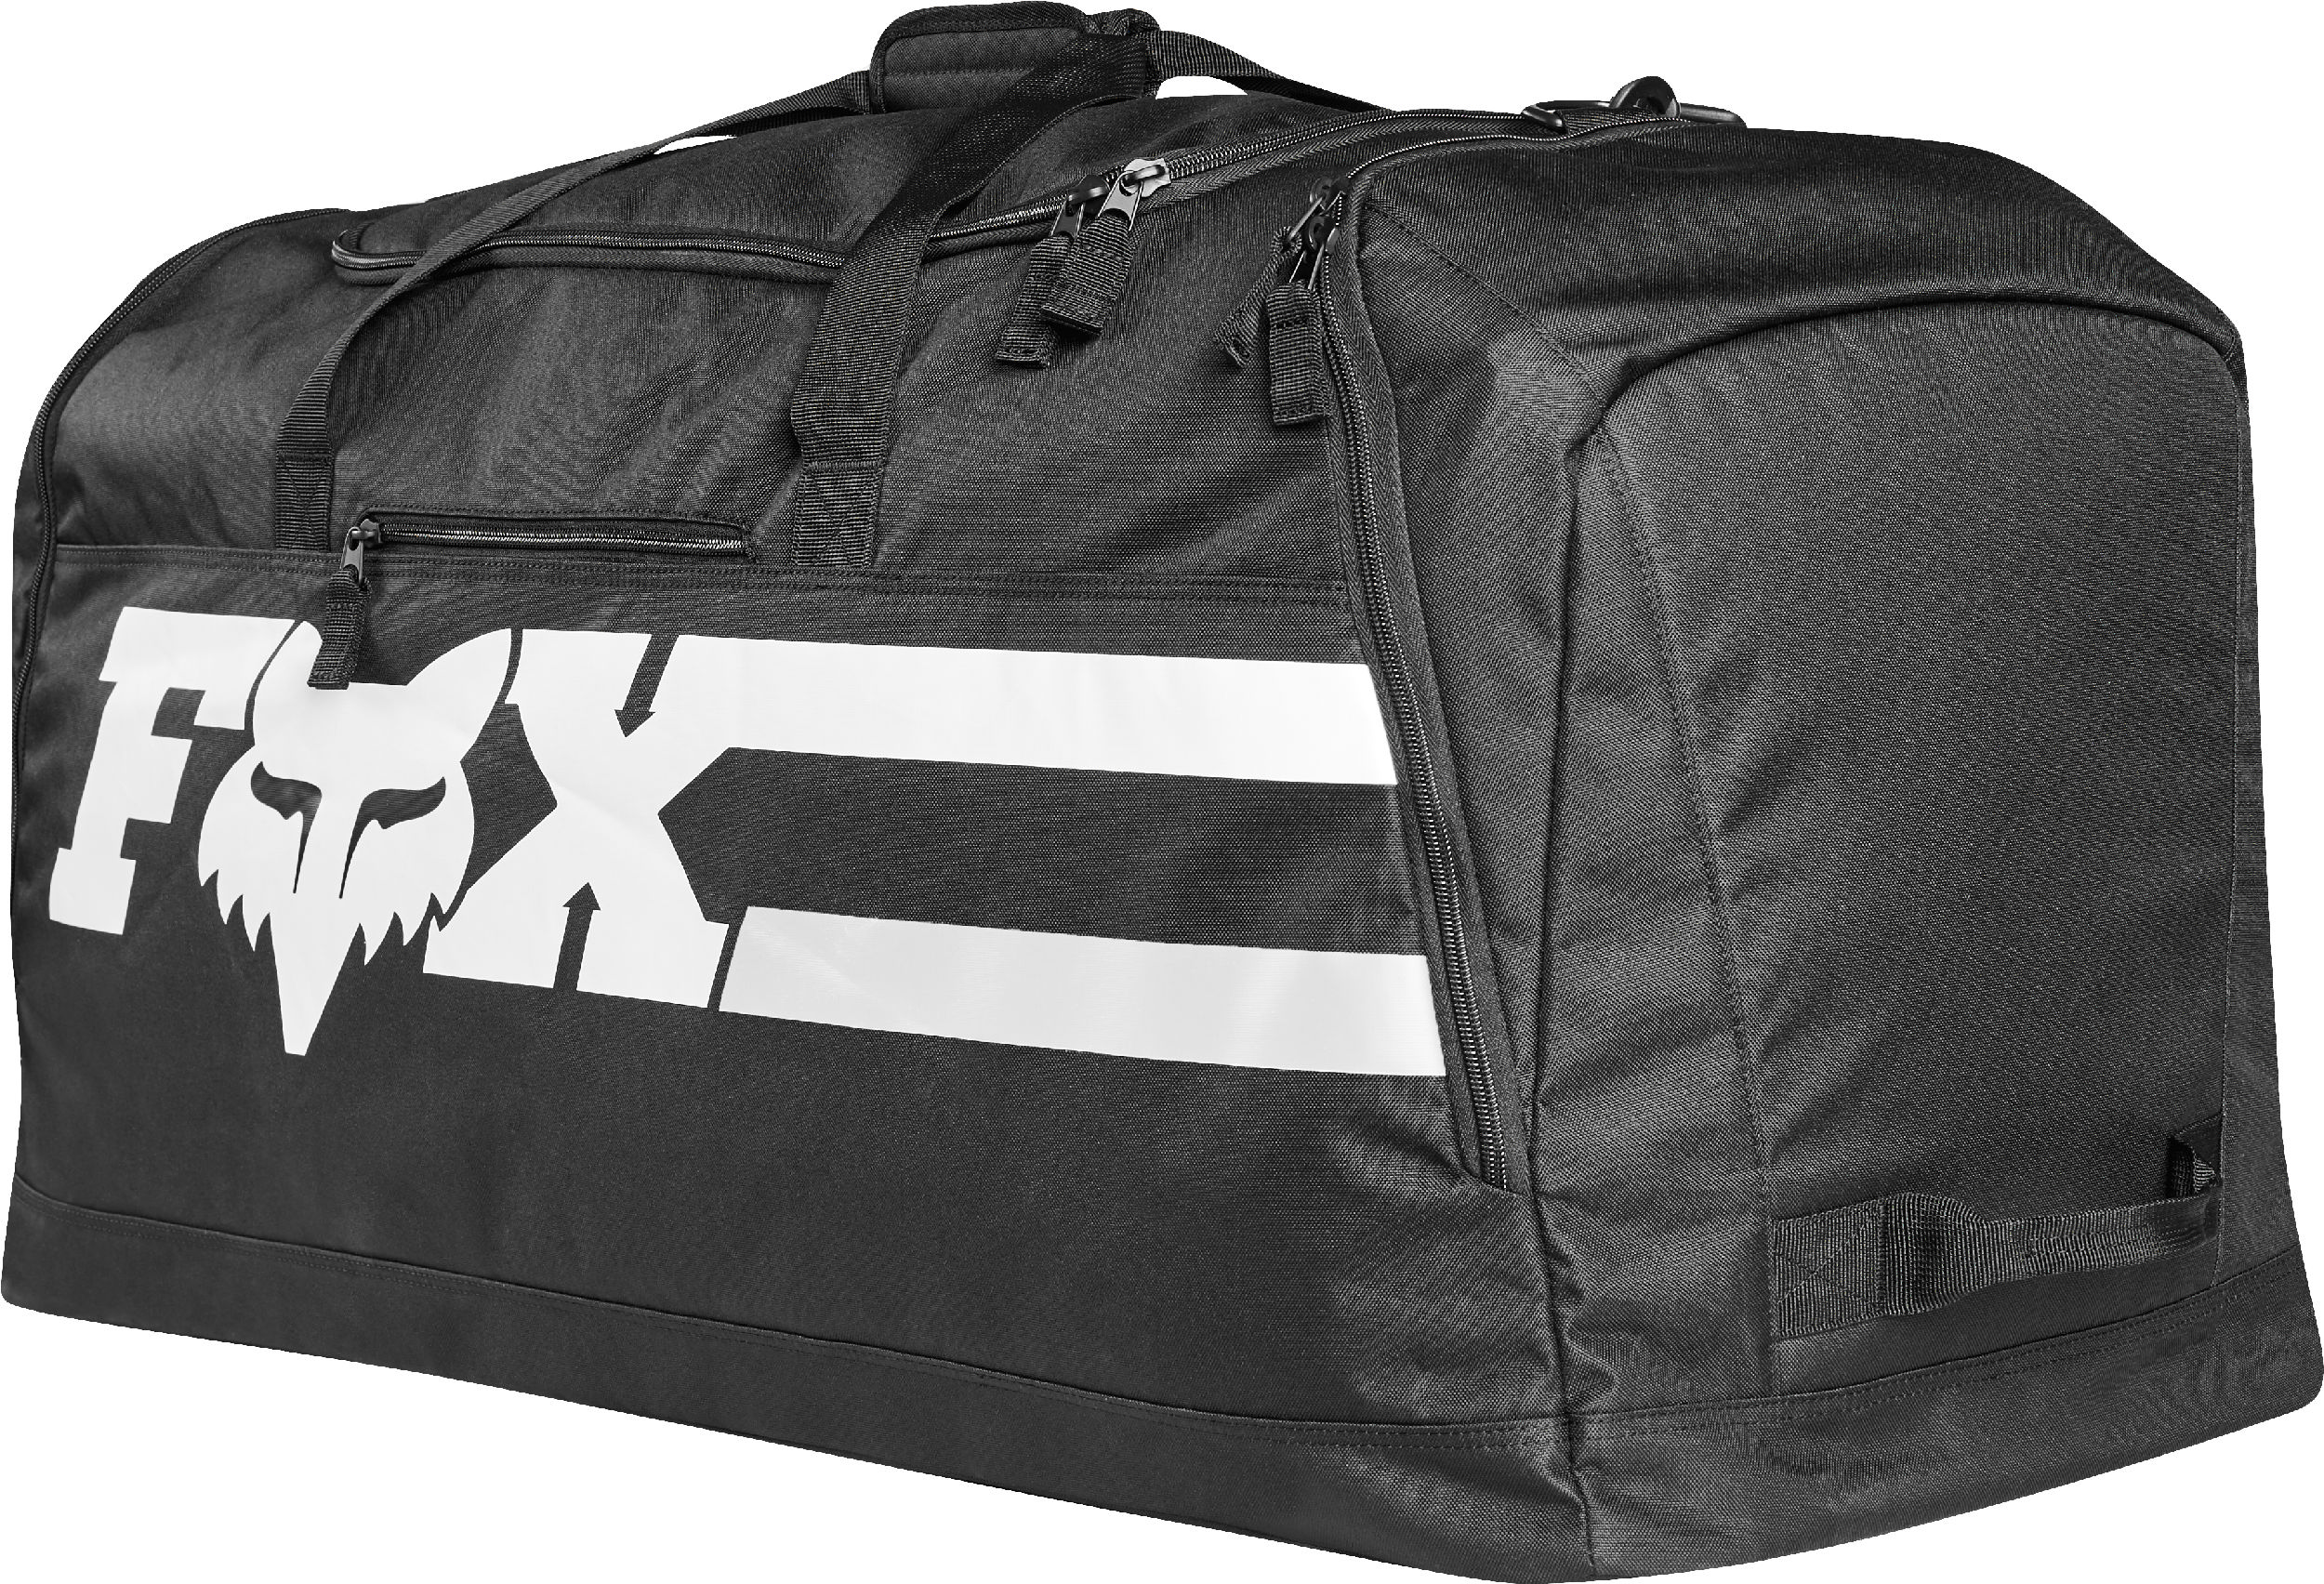 Fox Racing Black Podium 180 Cota Dirt Bike Gear Bag Mx Atv 2020 Ebay